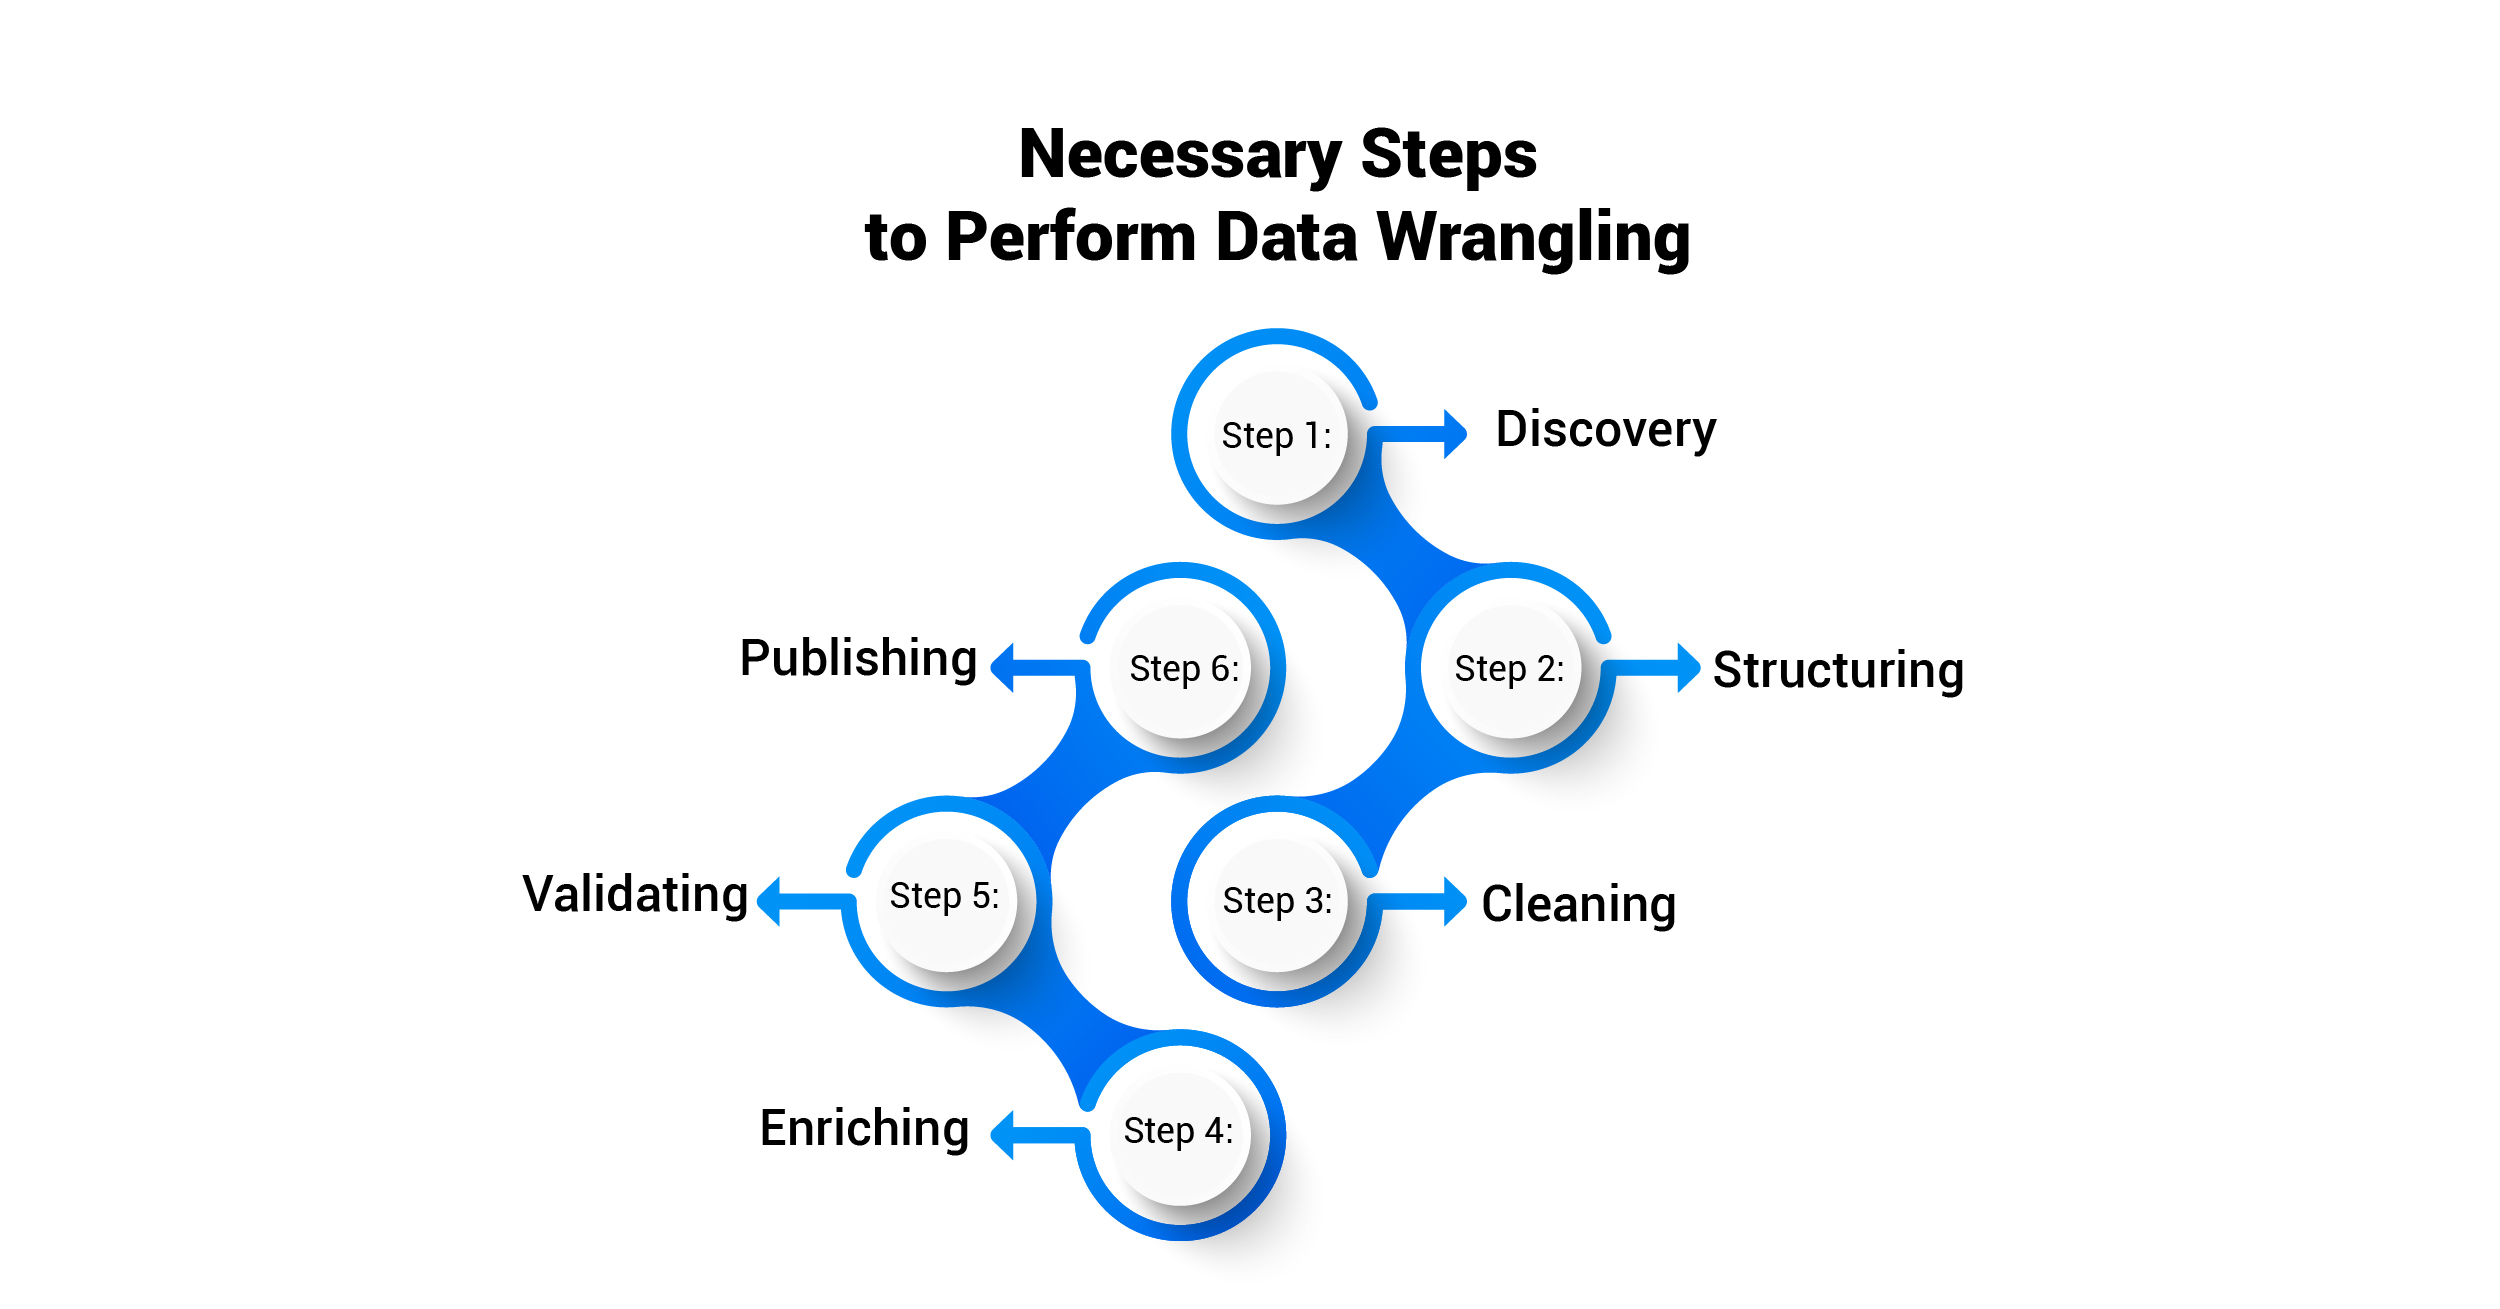 Necessary Steps to Perform Data Wrangling